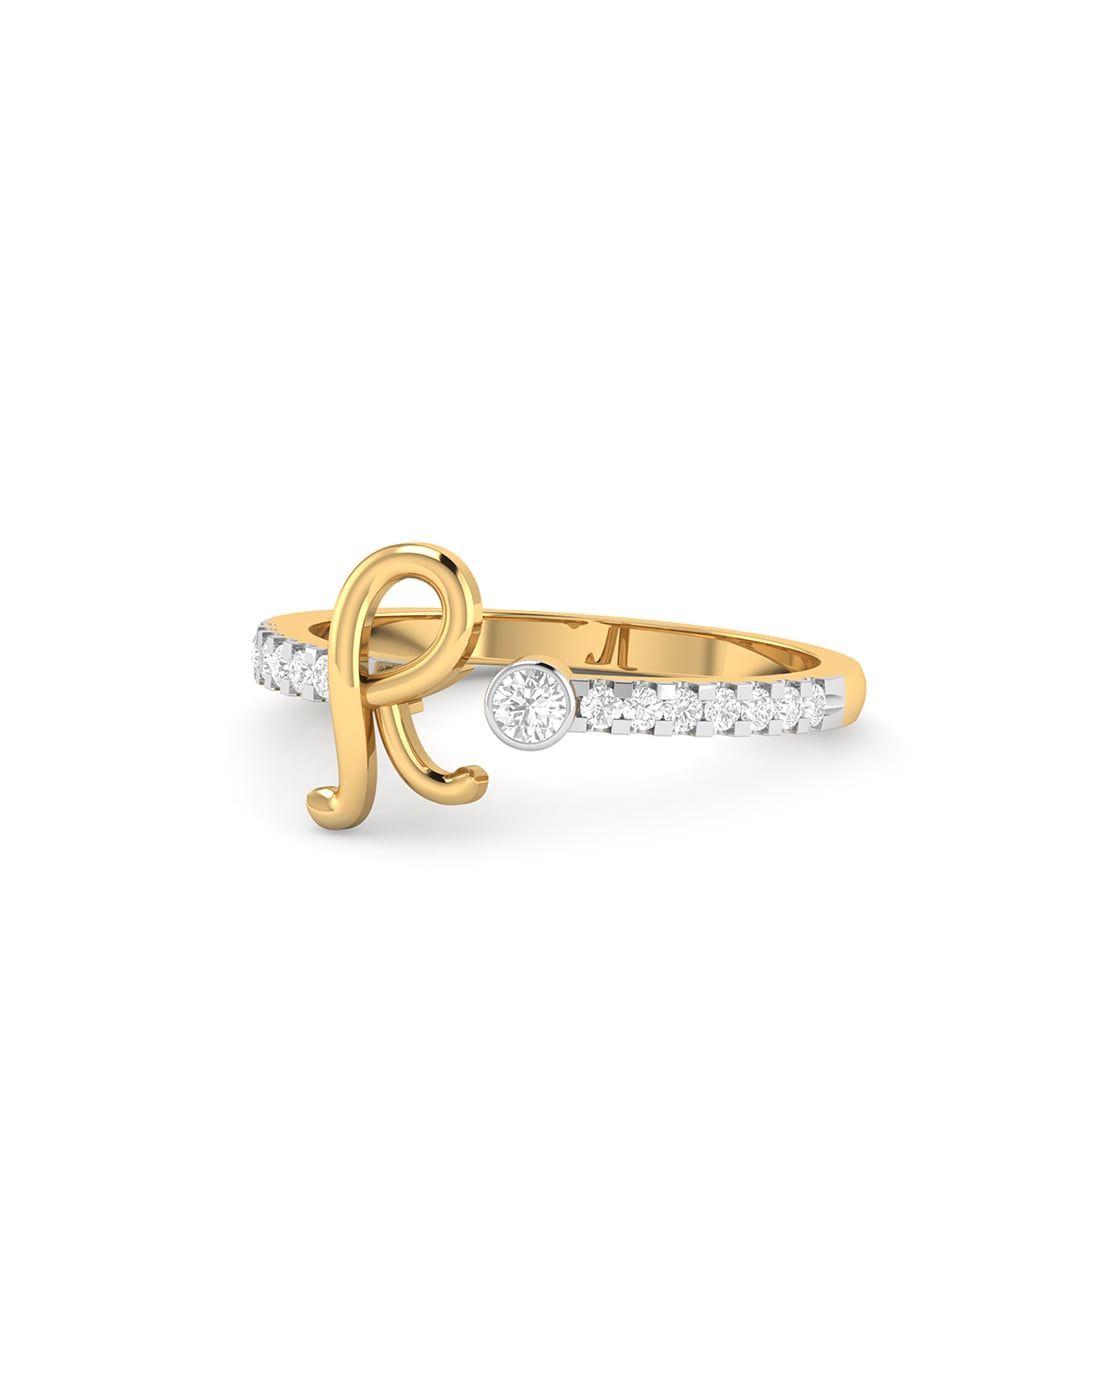 Initial R Letter Diamond Signet Ring 14K Solid Yellow Gold Sz 6 | eBay